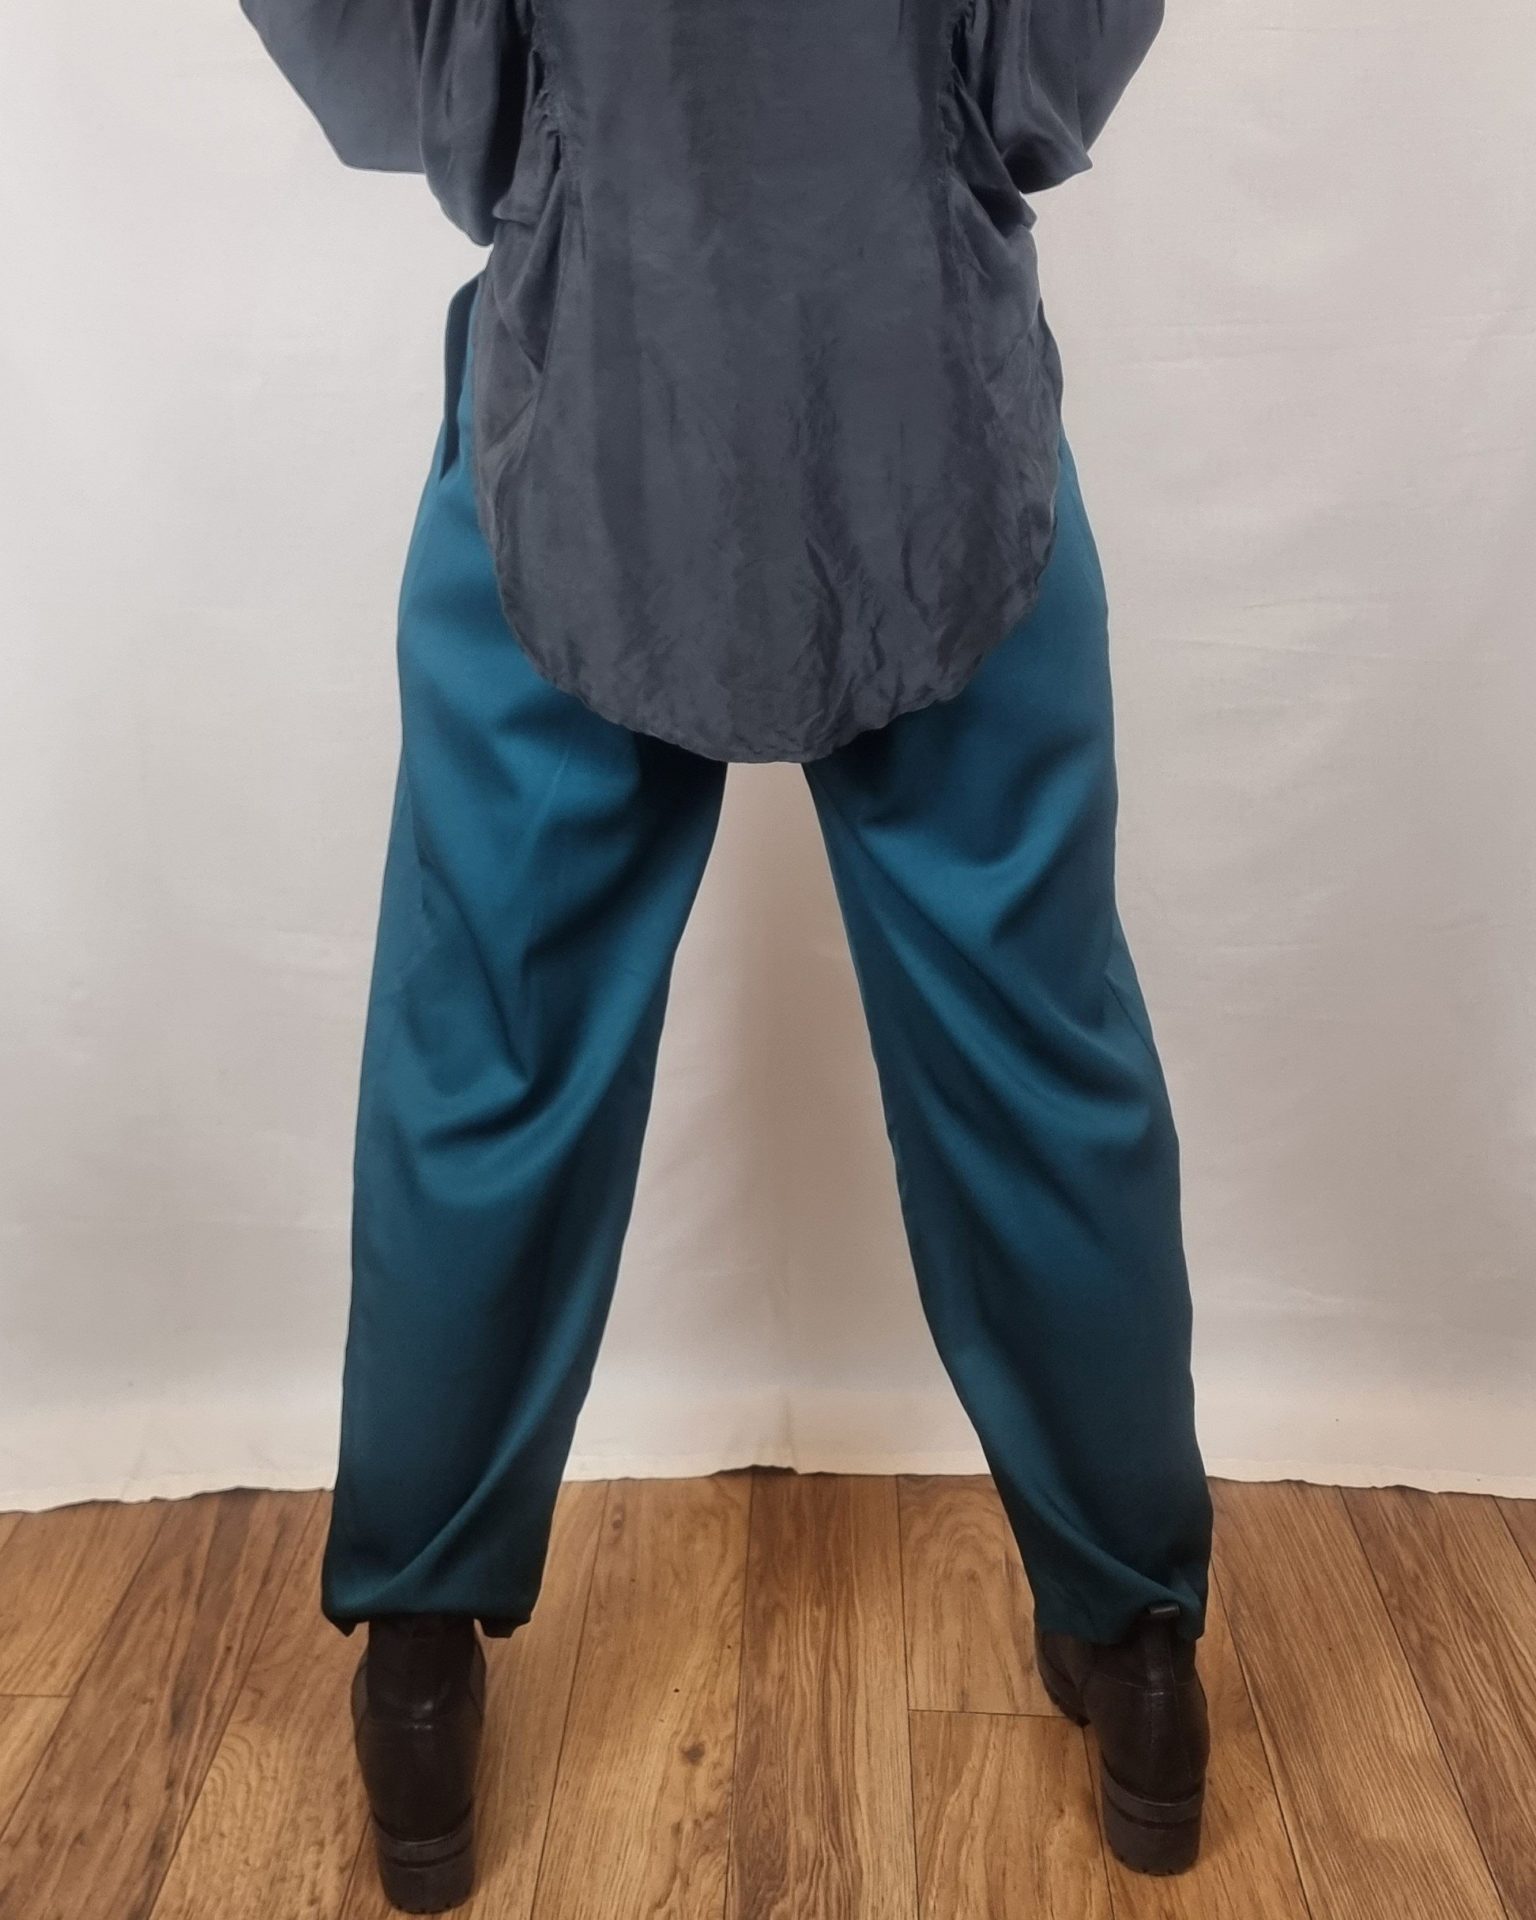 https://rhubarbjumble.com/wp2022/wp-content/uploads/2022/10/deep-green-pleated-80s-high-waisted-trousers-uk-size-10-3.jpg